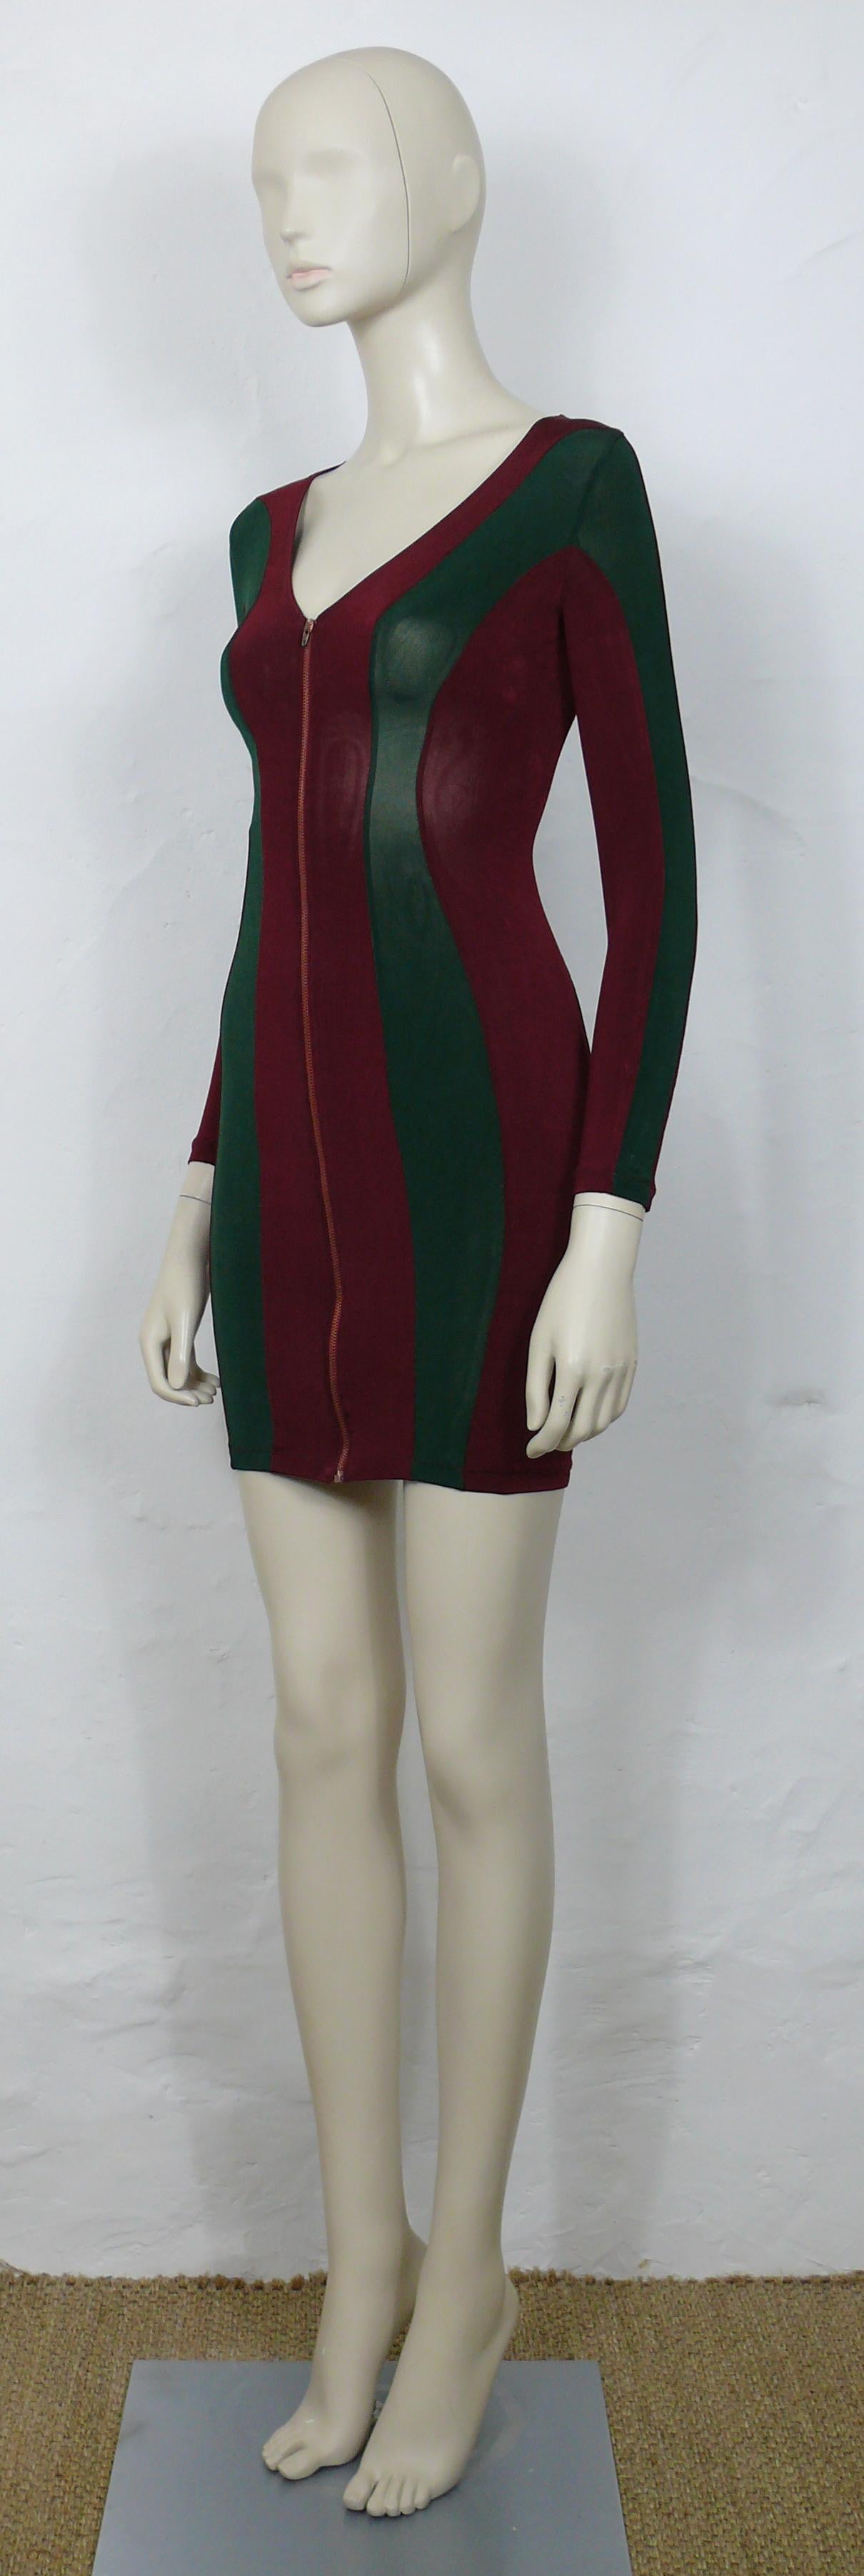 JEAN PAUL GAULTIER JUNIOR Vintage Green/Burgundy Red Color Block Bodycon Dress For Sale 1